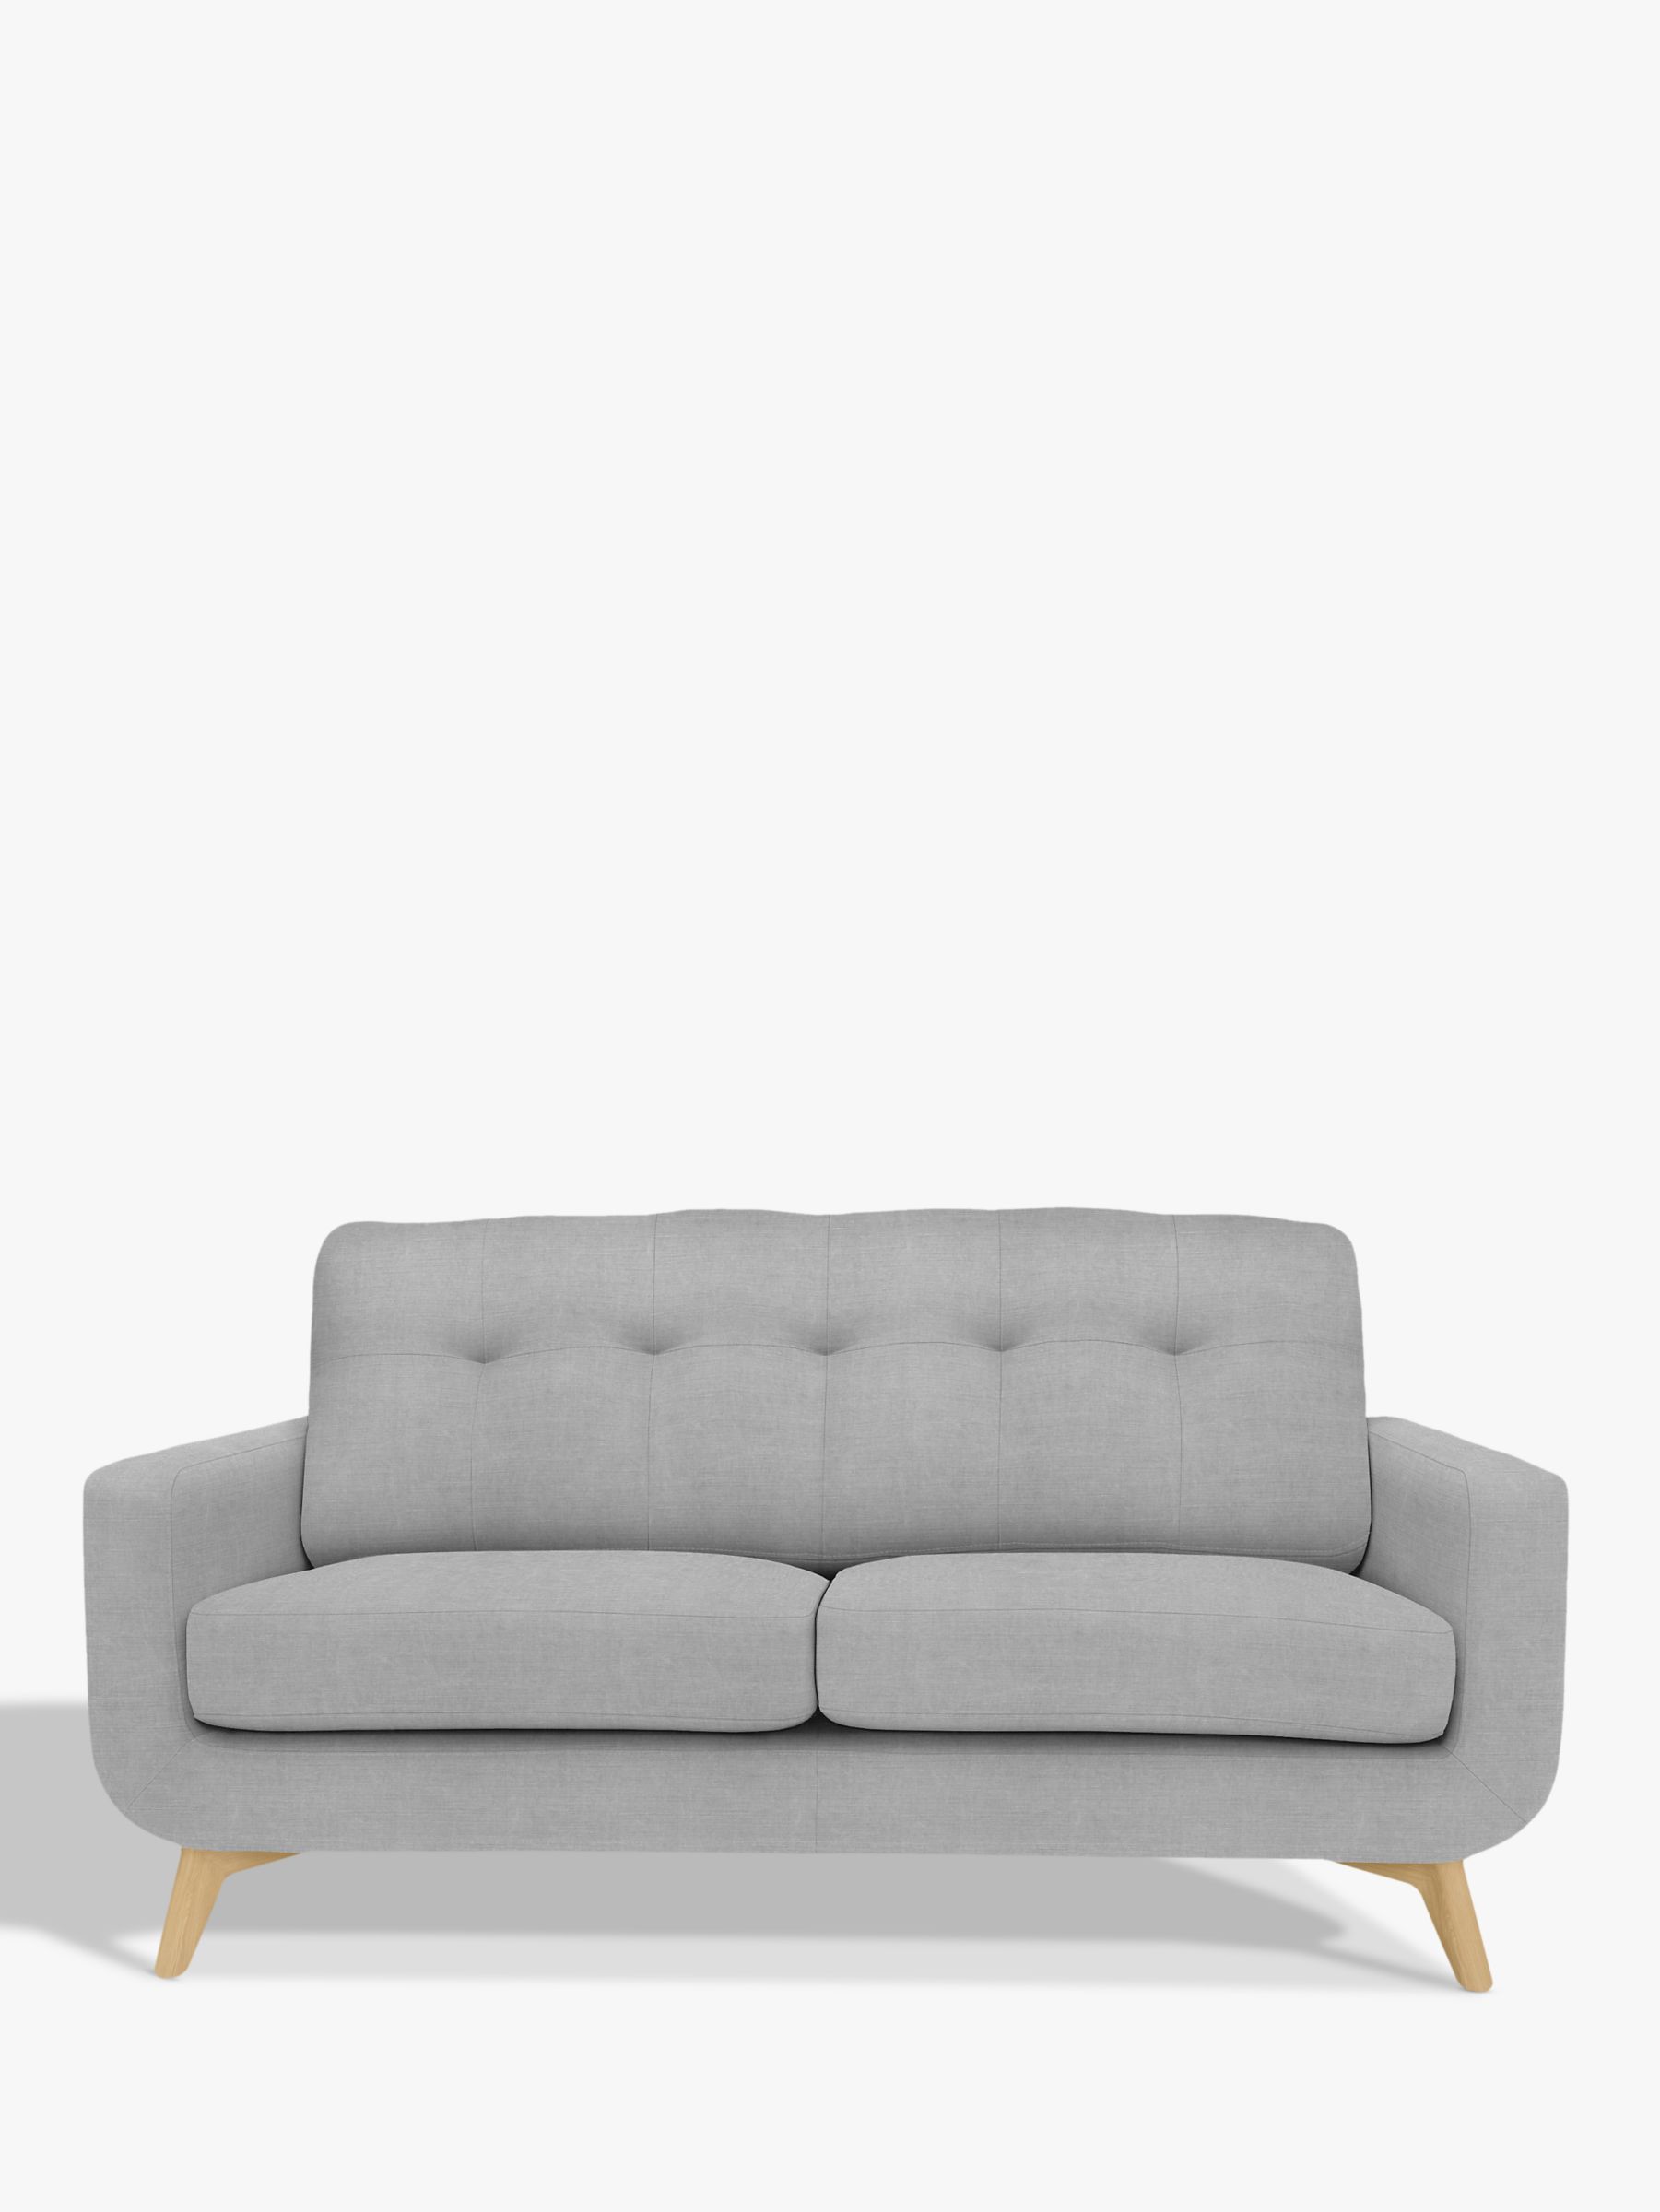 Photo of John lewis barbican medium 2 seater sofa